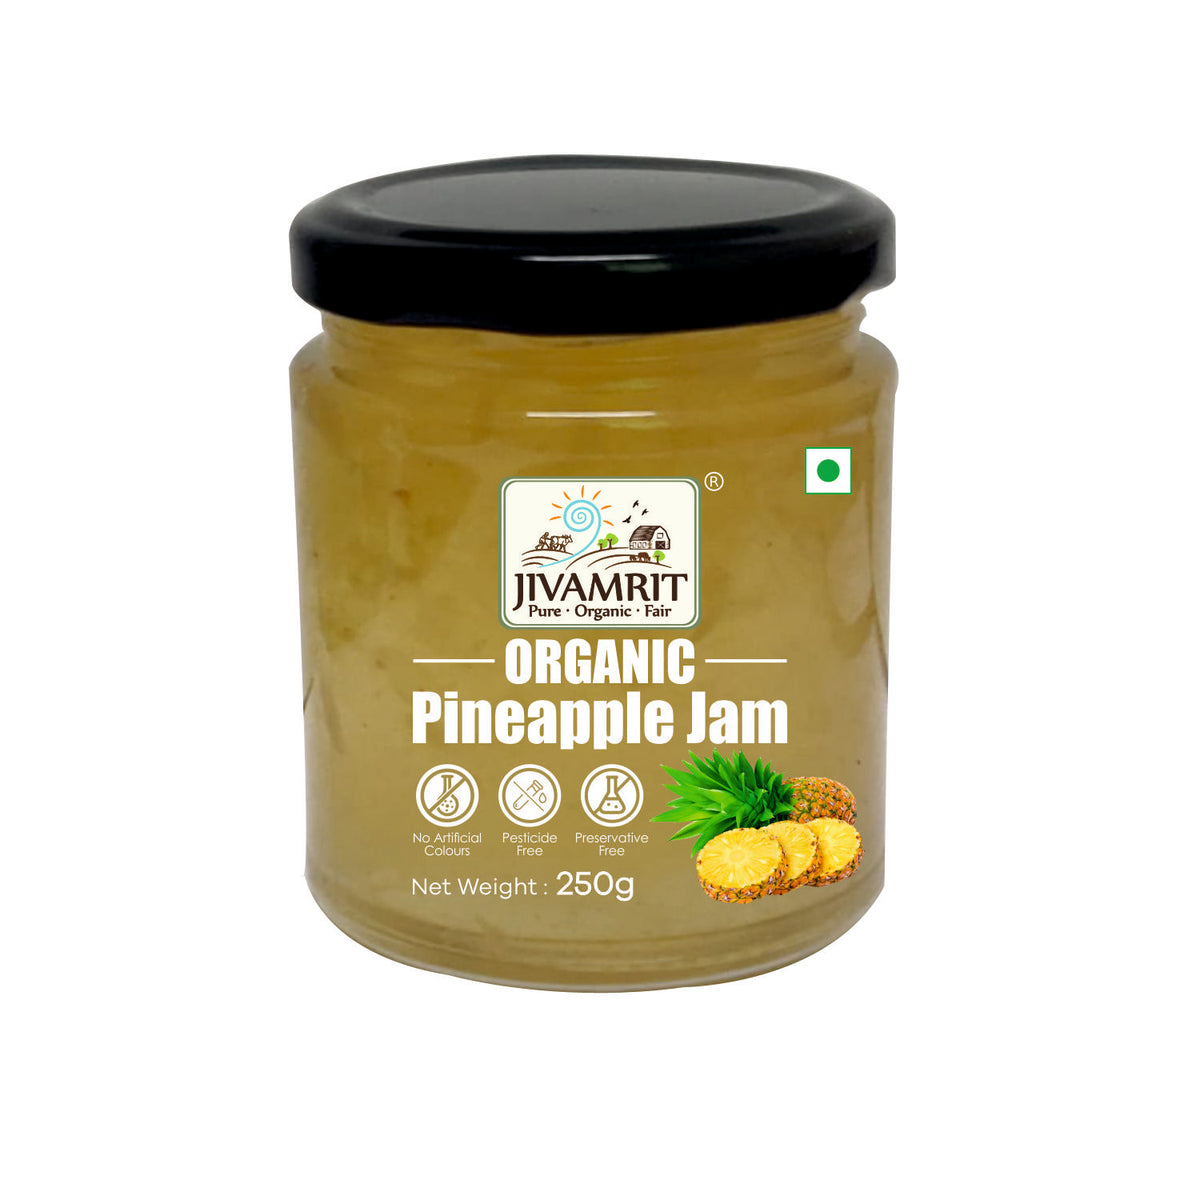 Organic Pineapple Jam 250g - Organic Healthy Jam